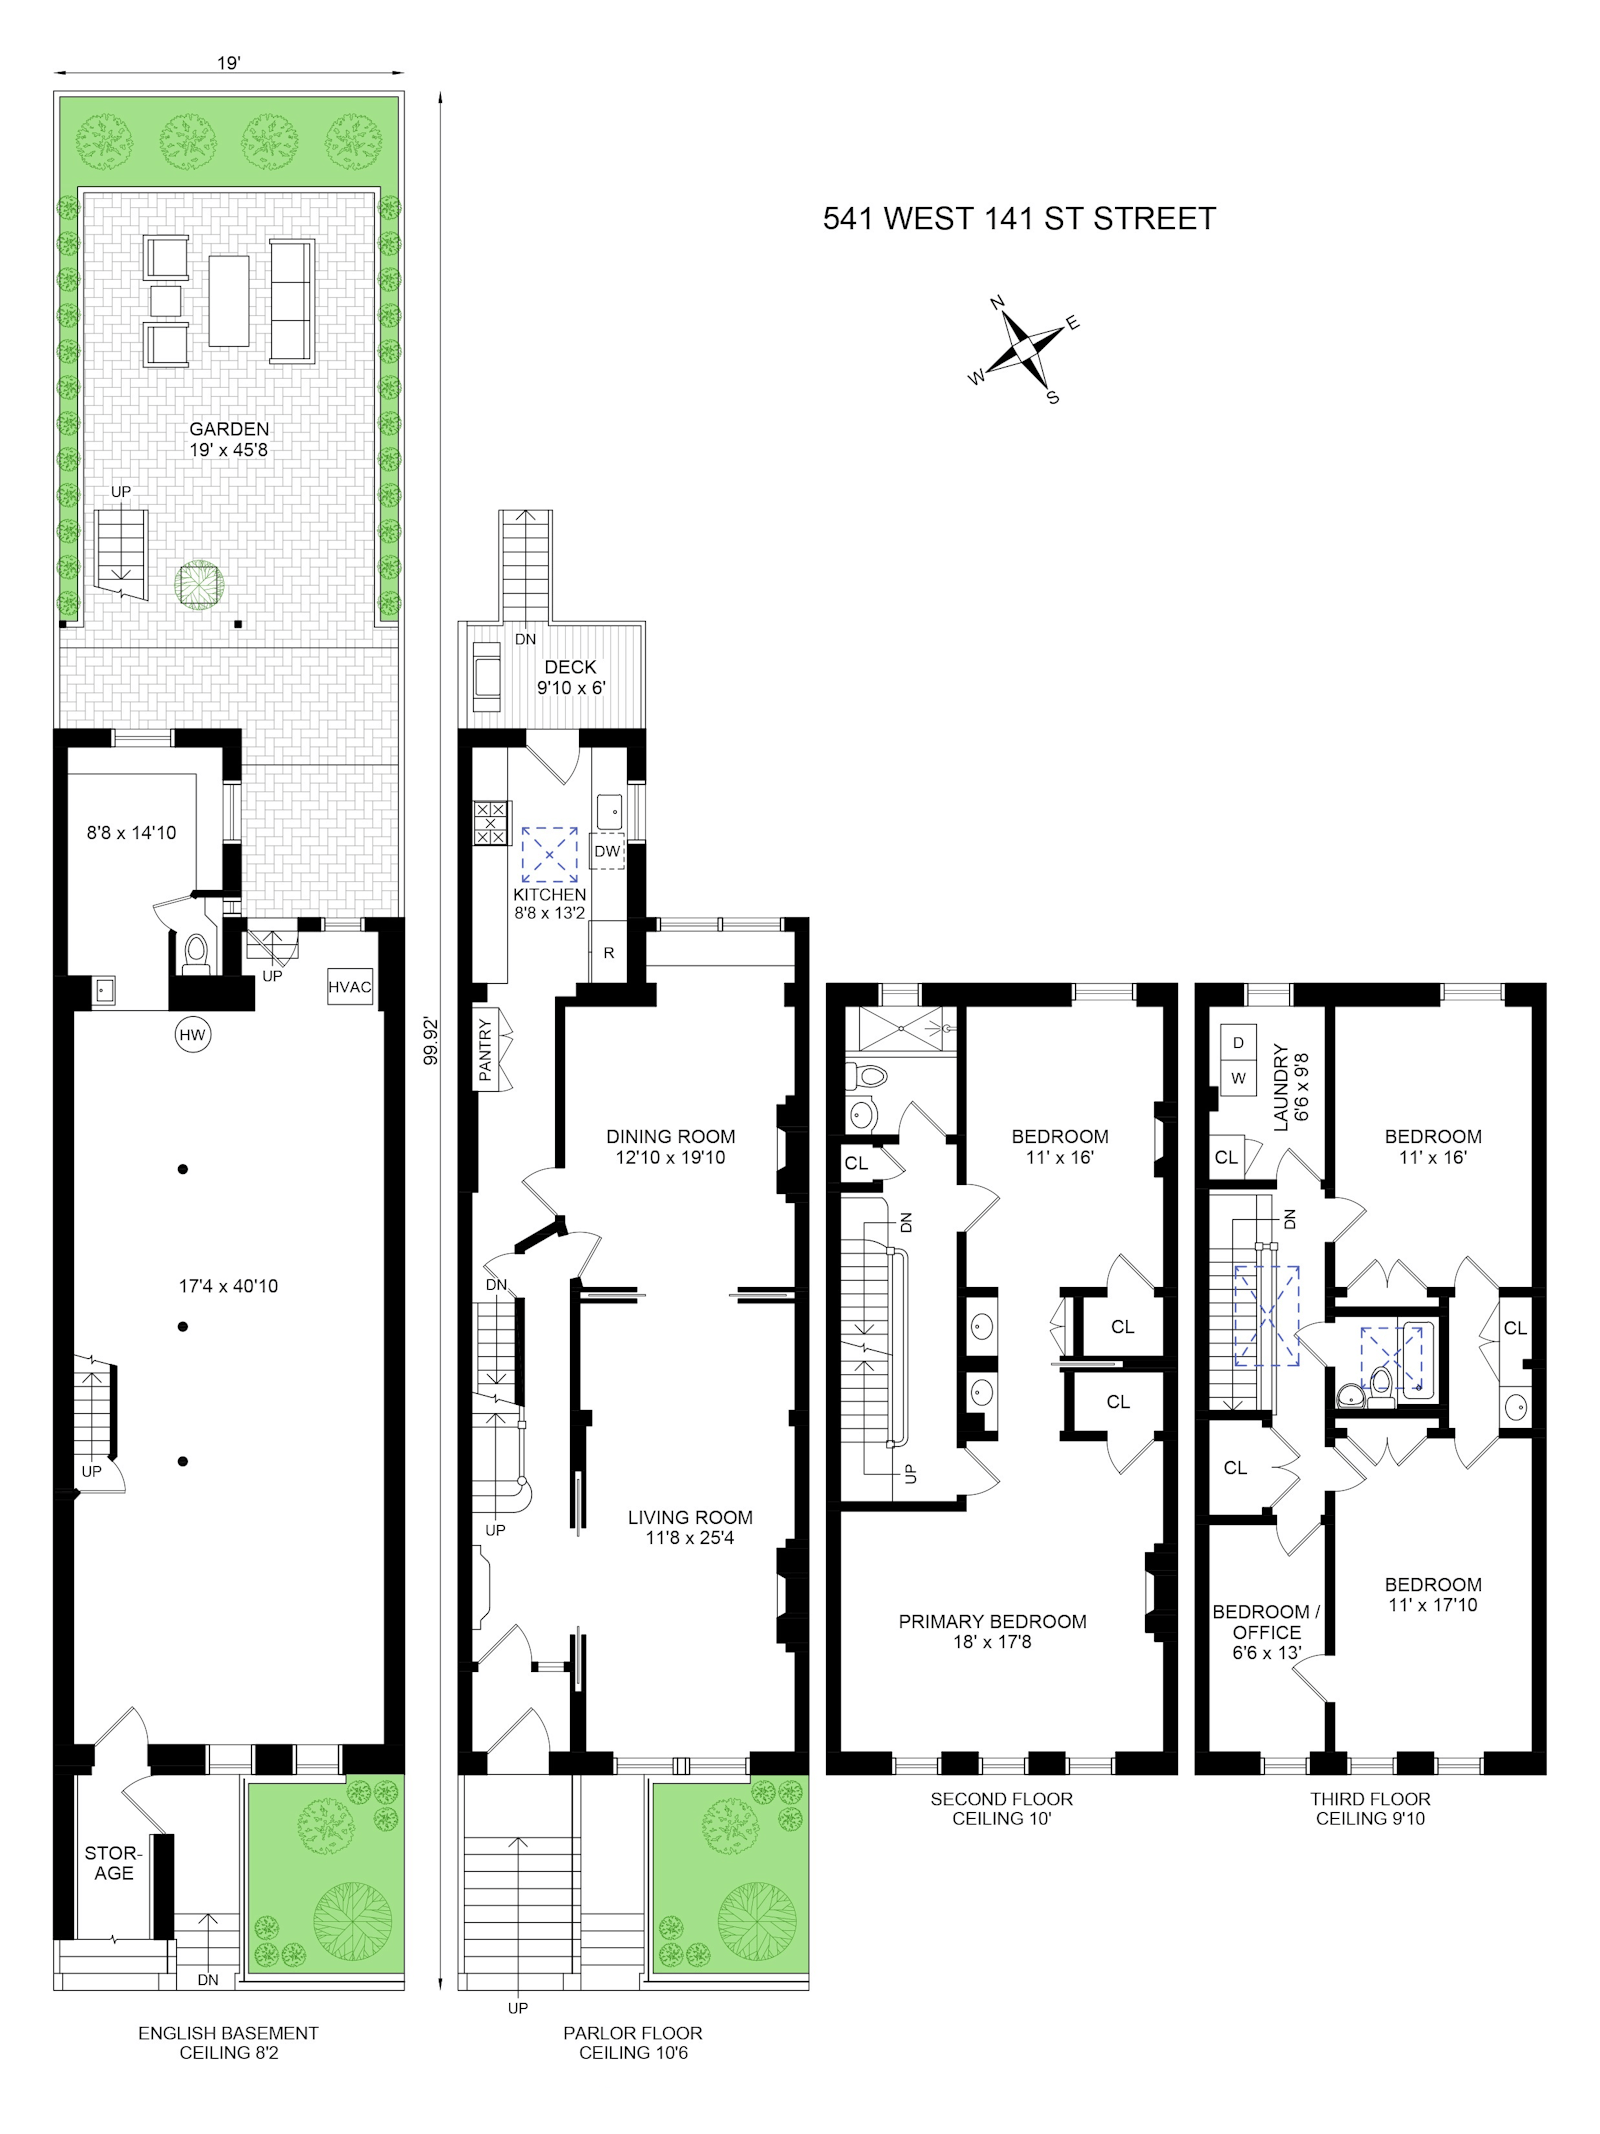 Floorplan for 541 West 141st Street